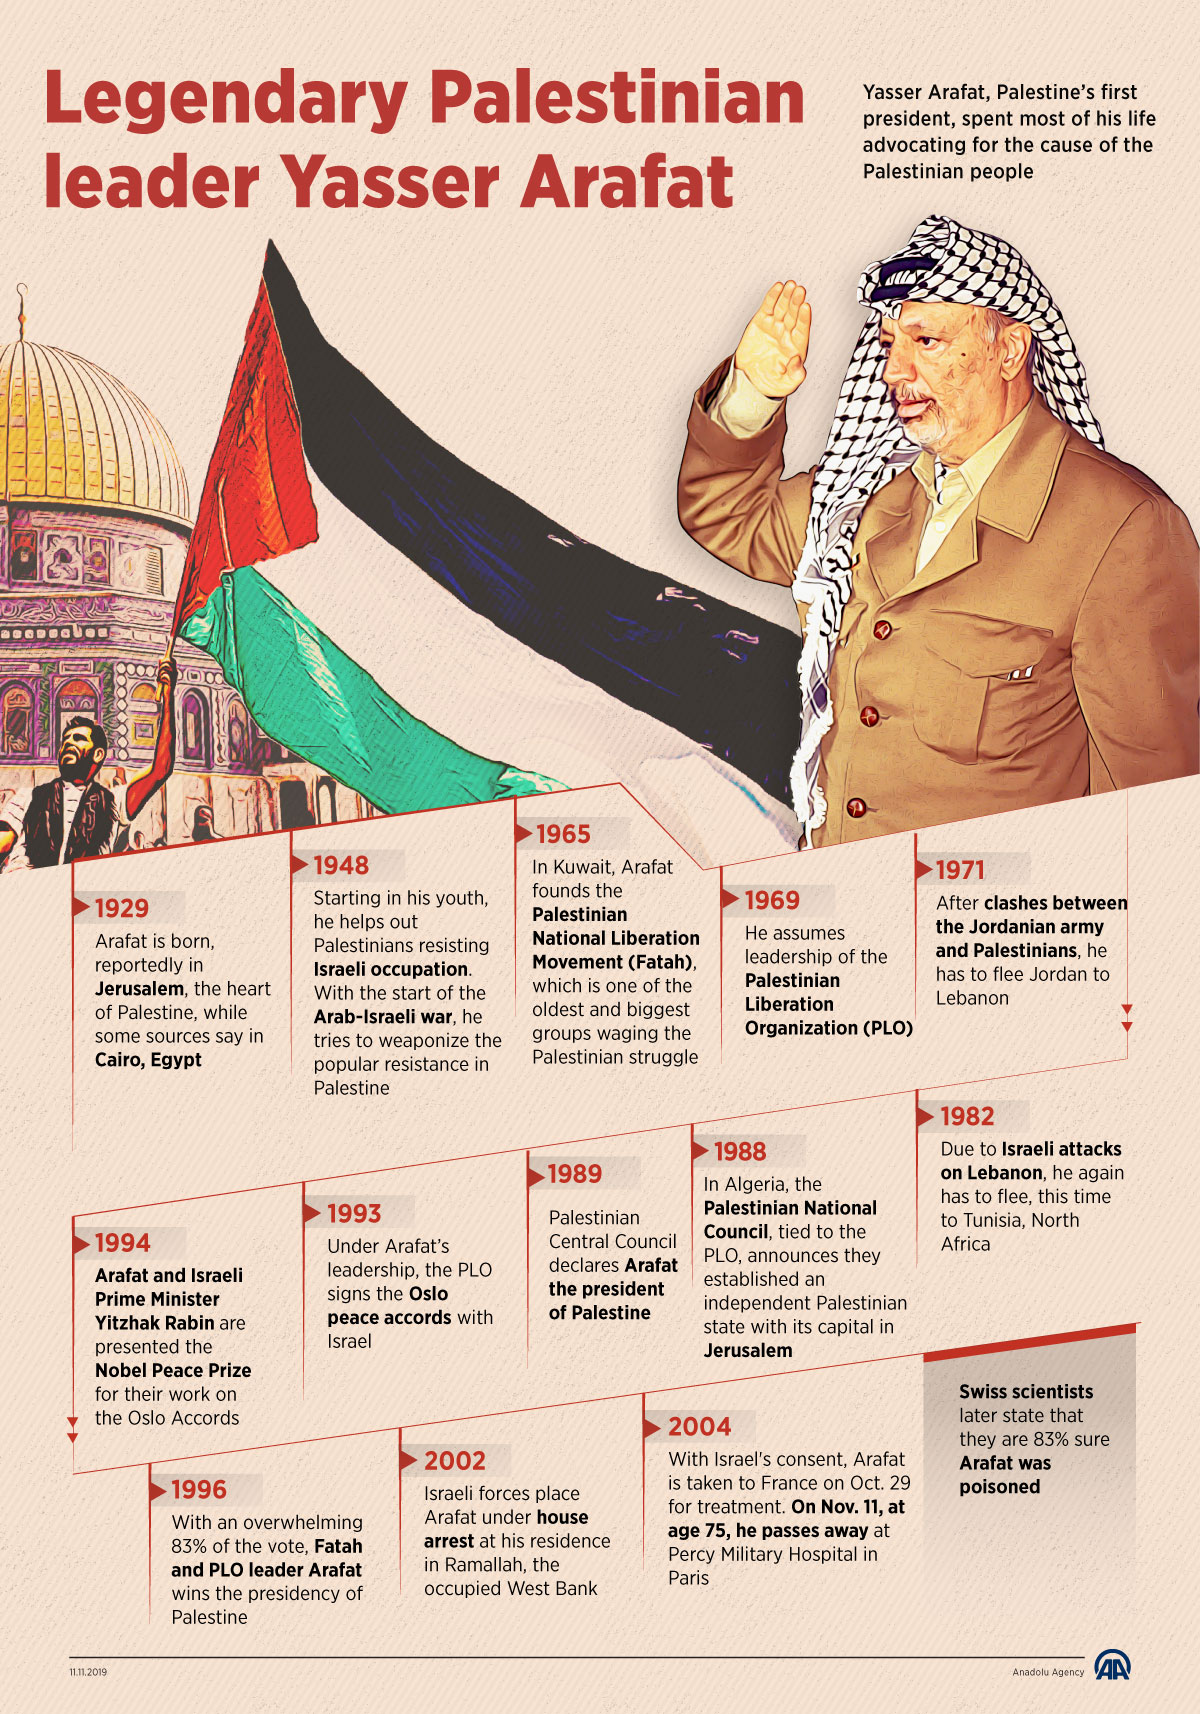 Legendary Palestinian leader Yasir Arafat